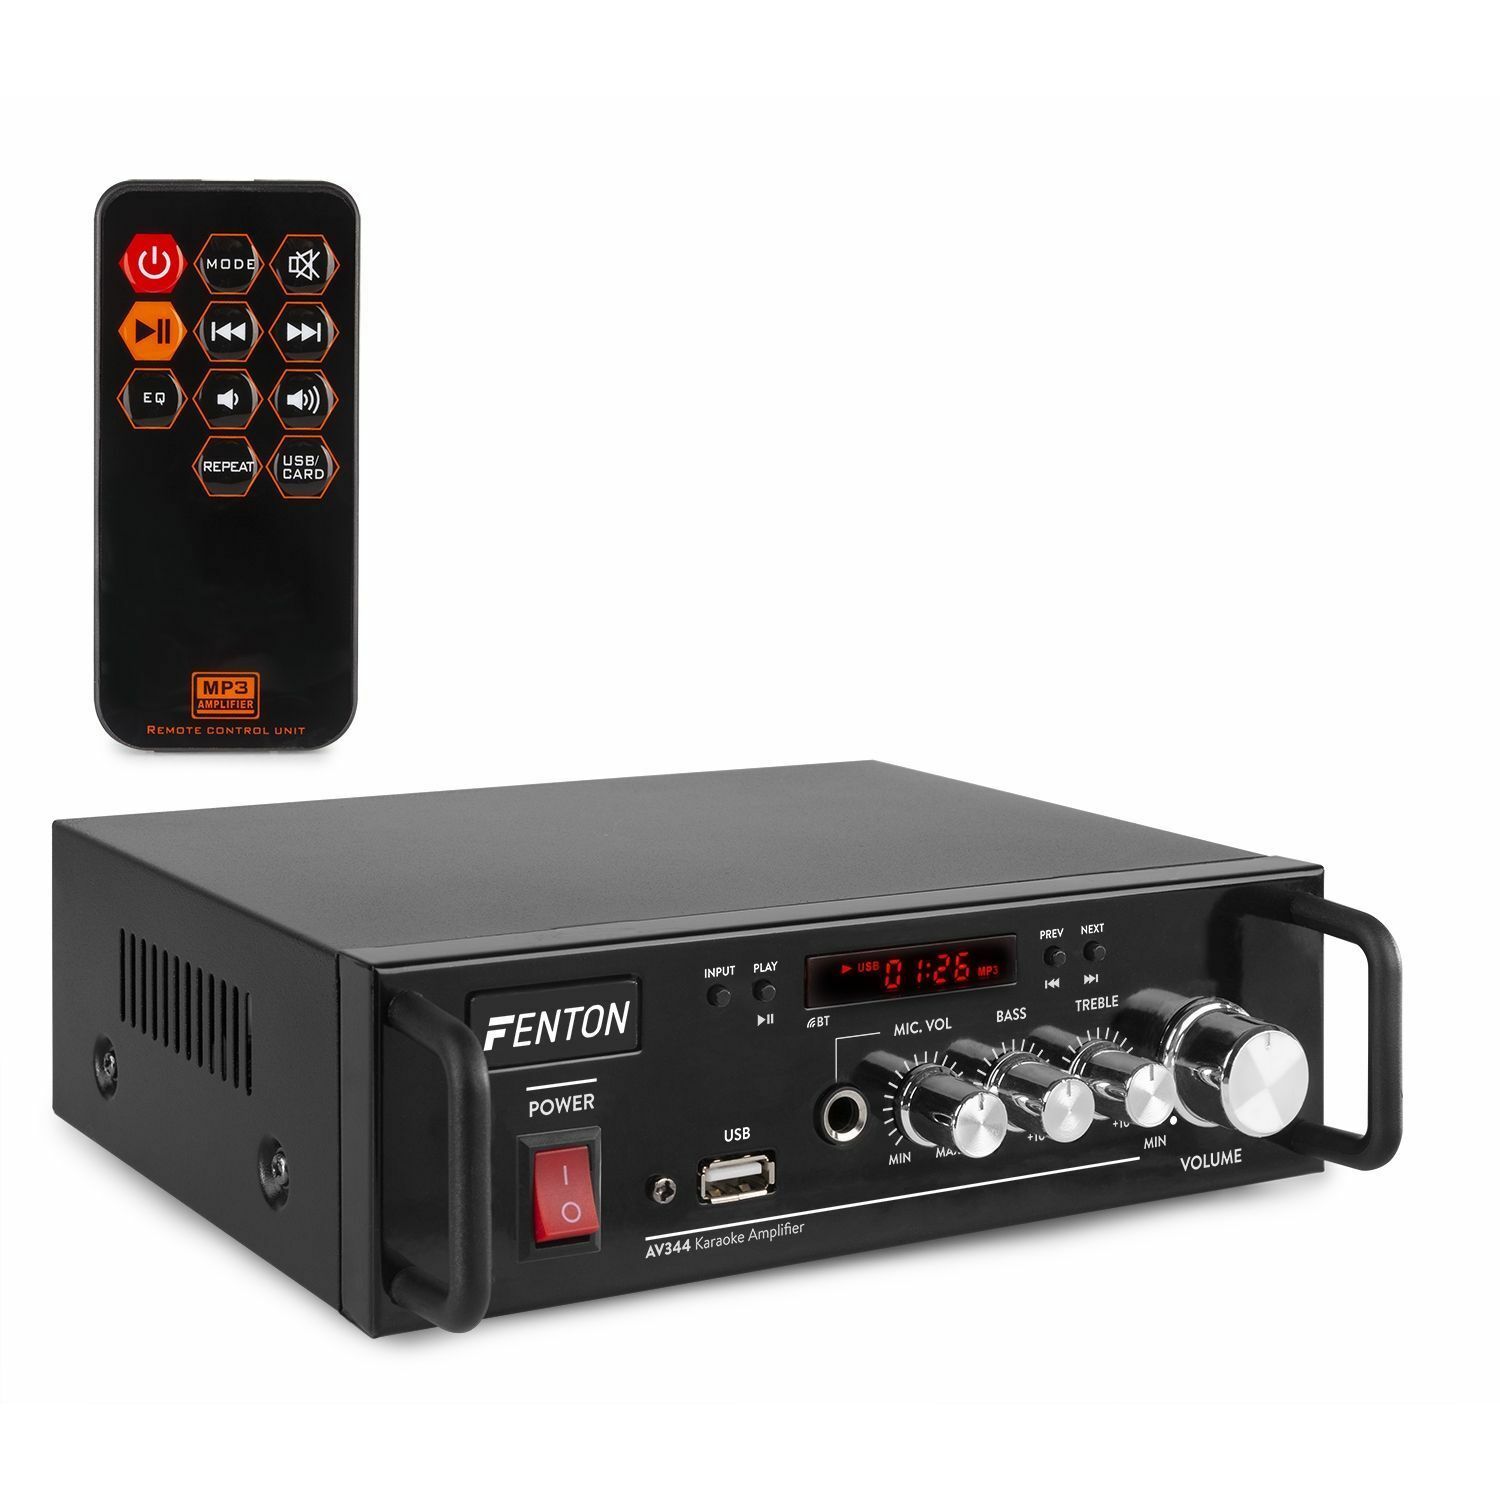 Retourdeal - Fenton AV344 karaoke versterker met Bluetooth en